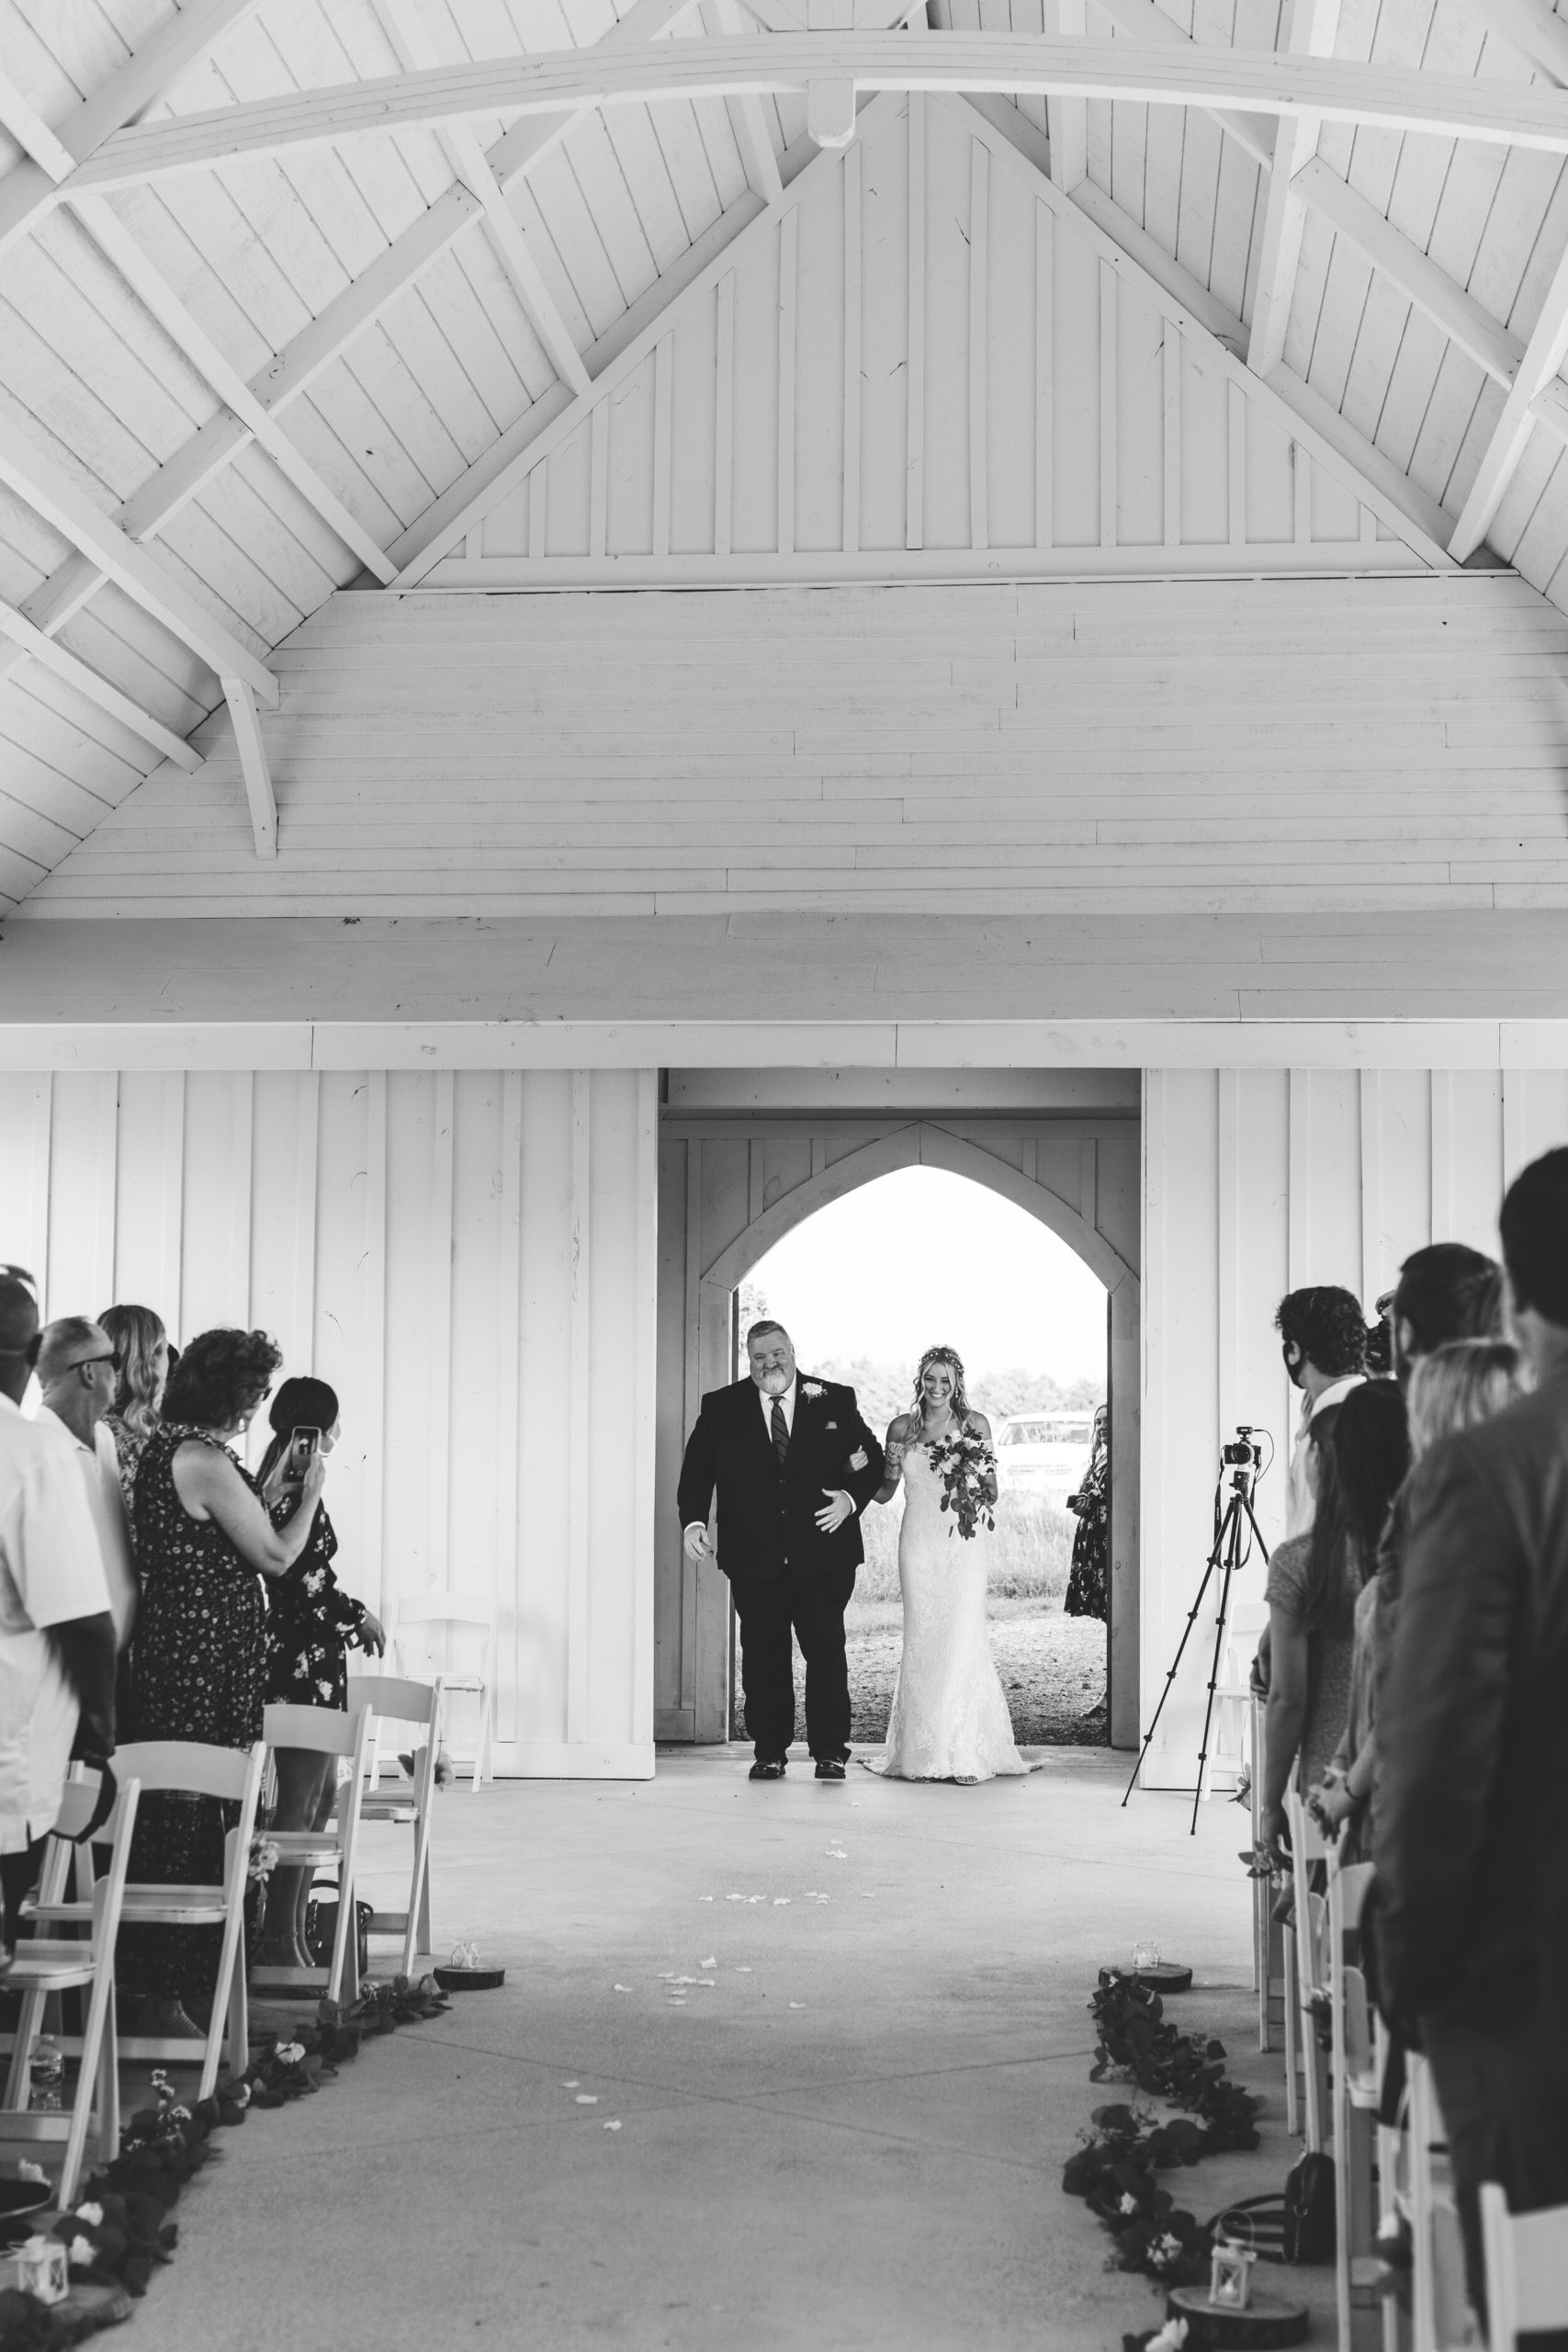 Hayley + Lorenzo - Summer White Chapel Wedding at Stone Hill Barn in Augusta, Kansas142.jpg